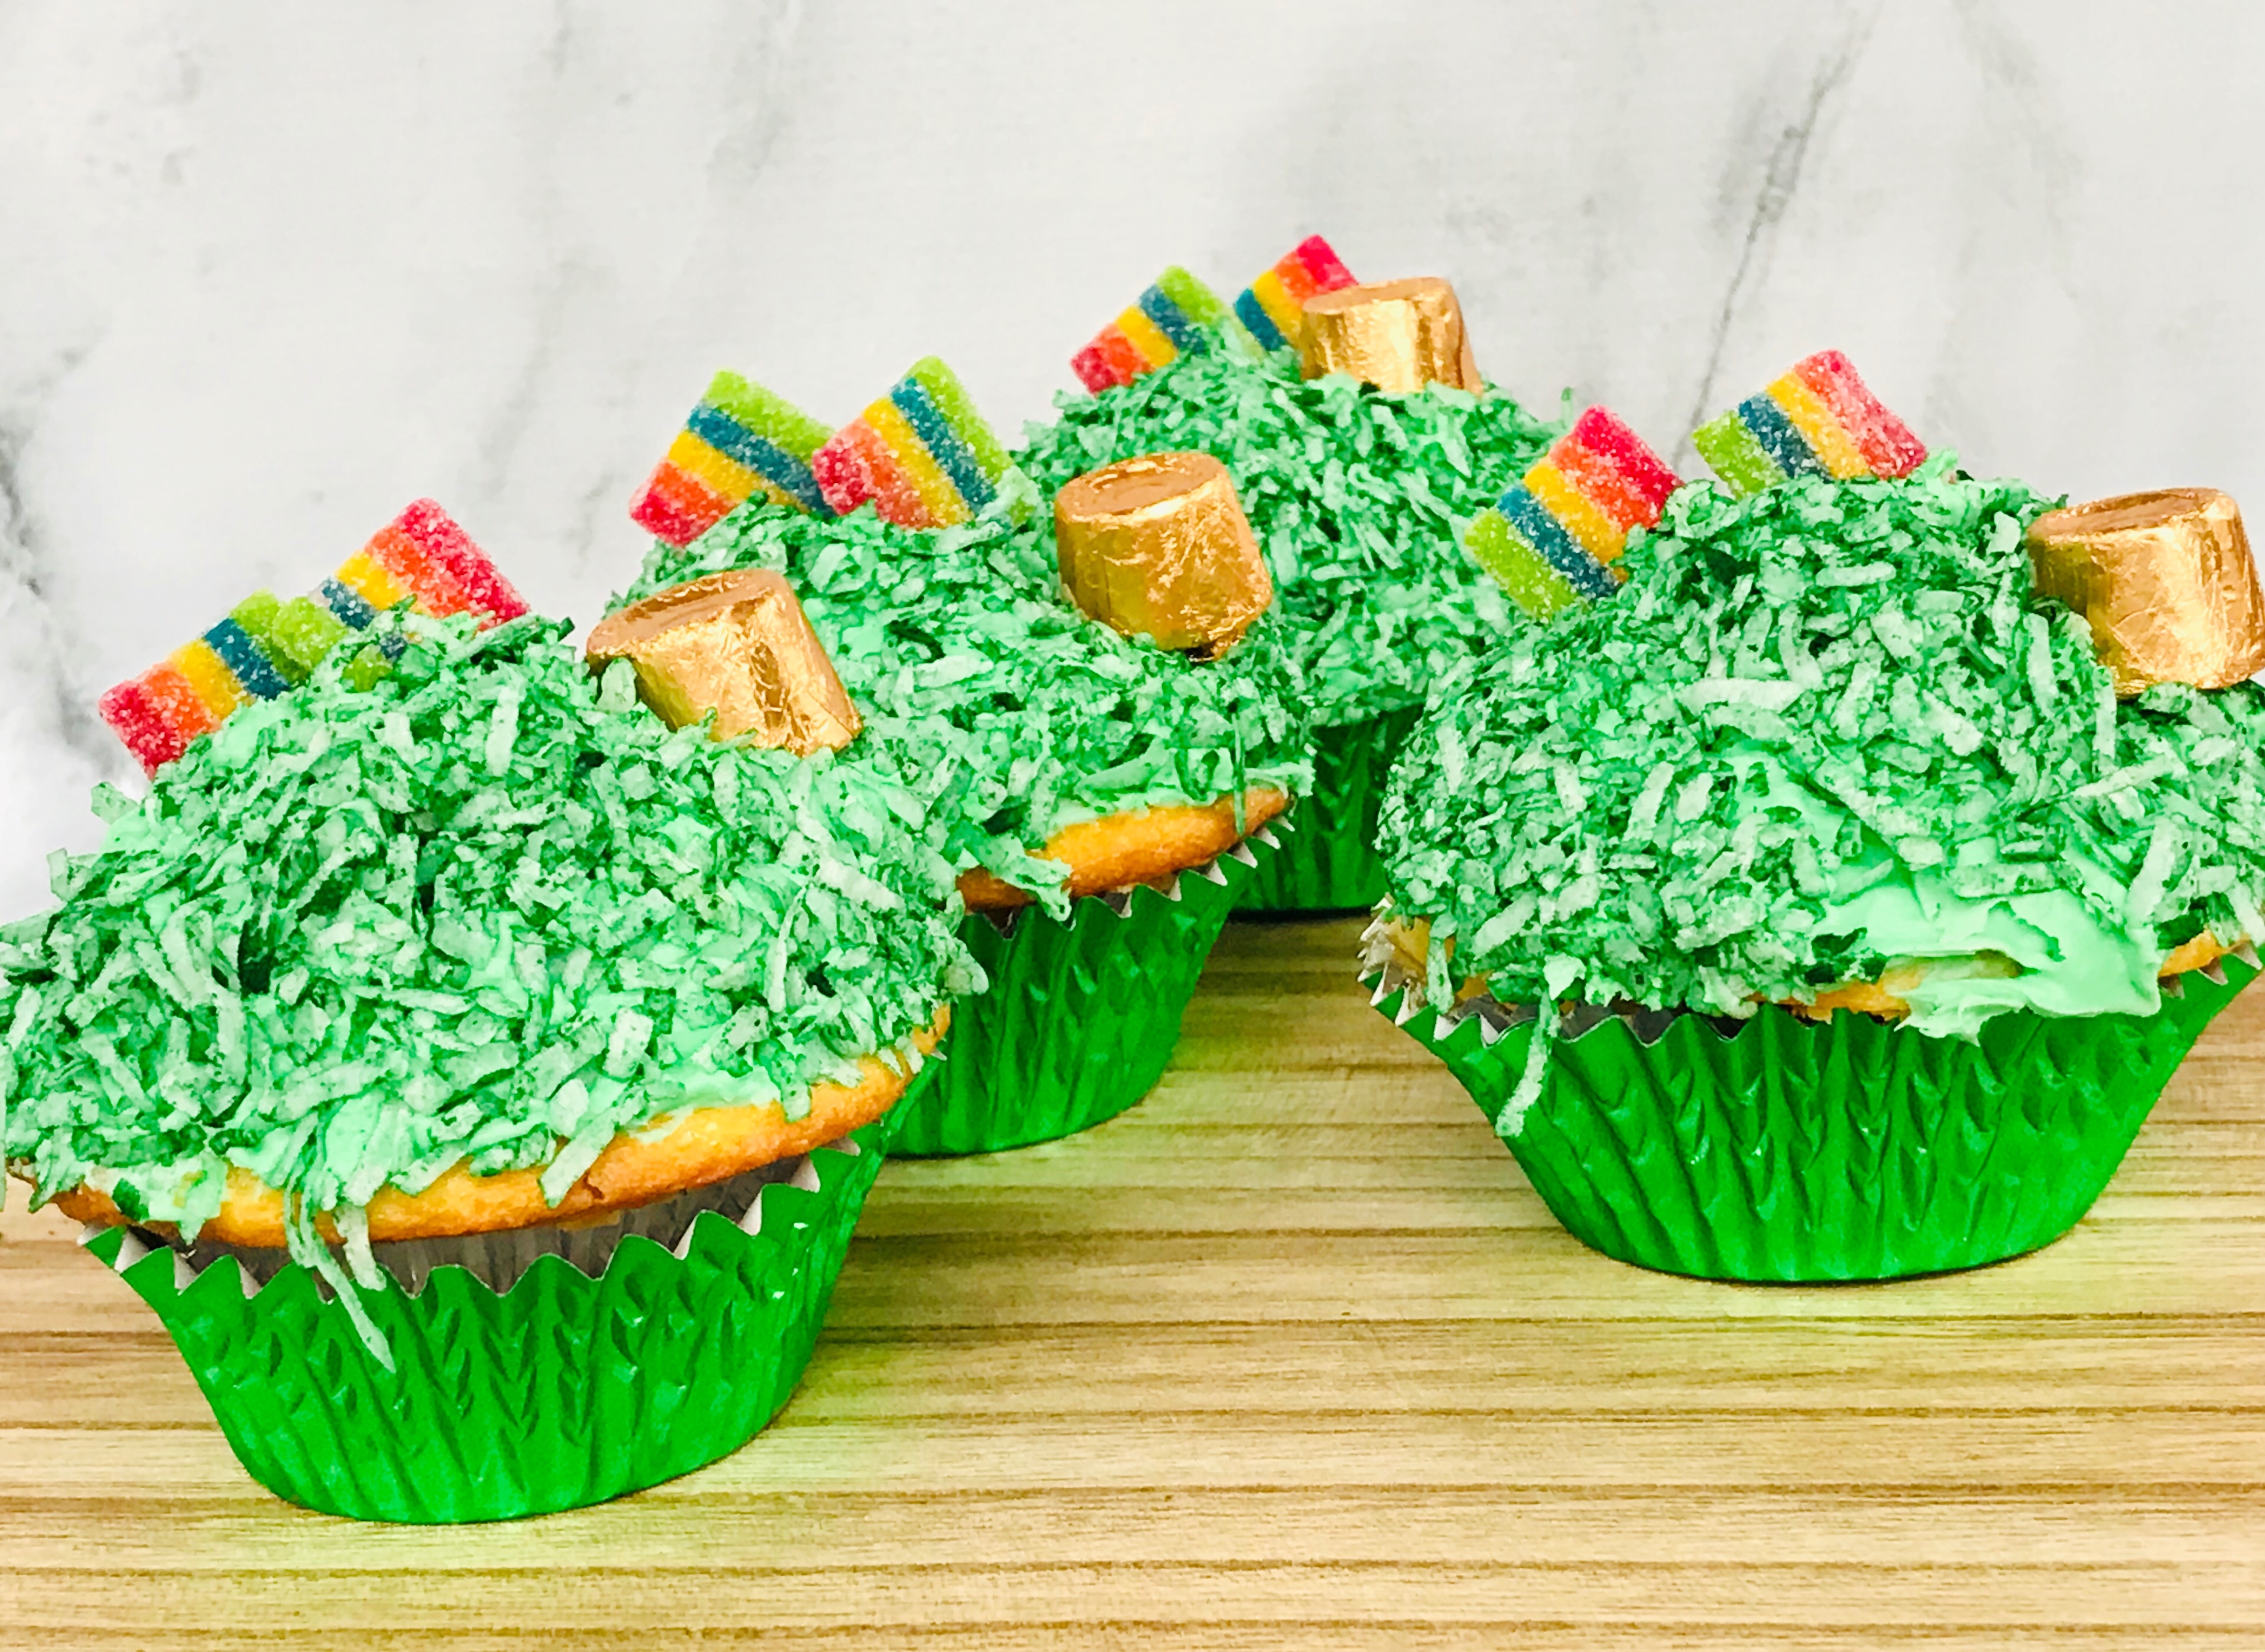 Saint Patrick’s Day Cupcakes